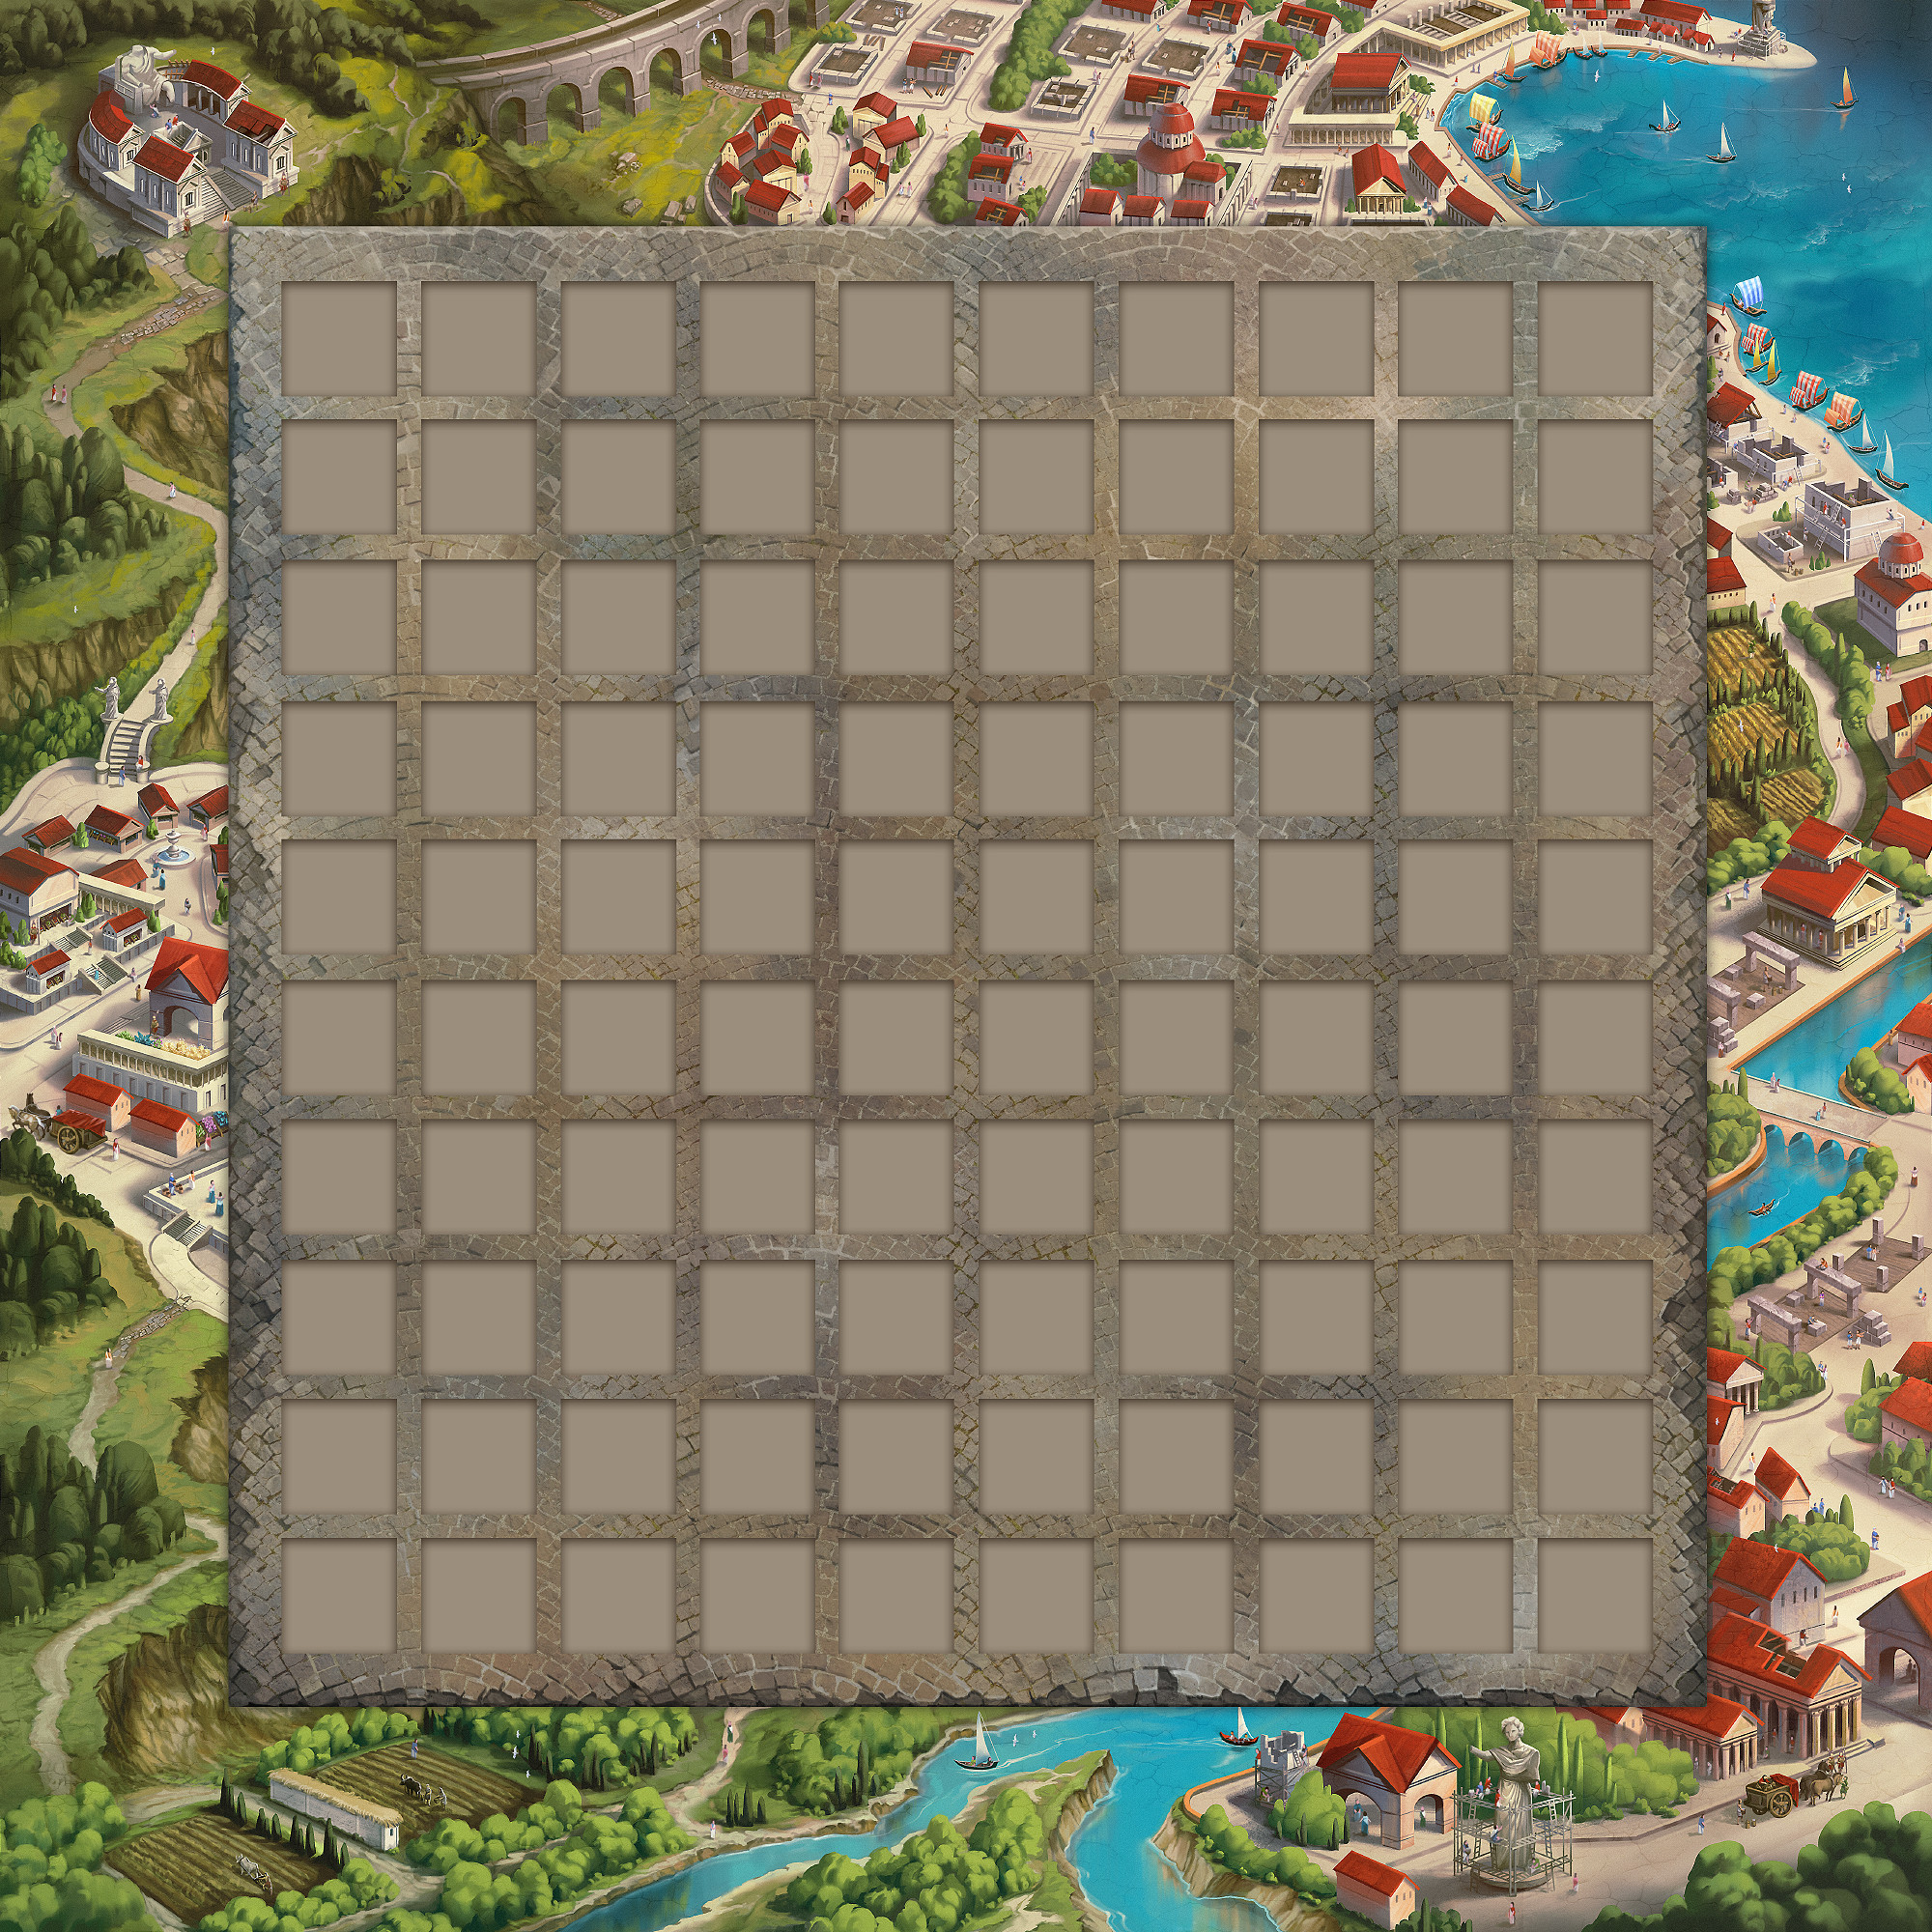 Full Game Board (no UI)